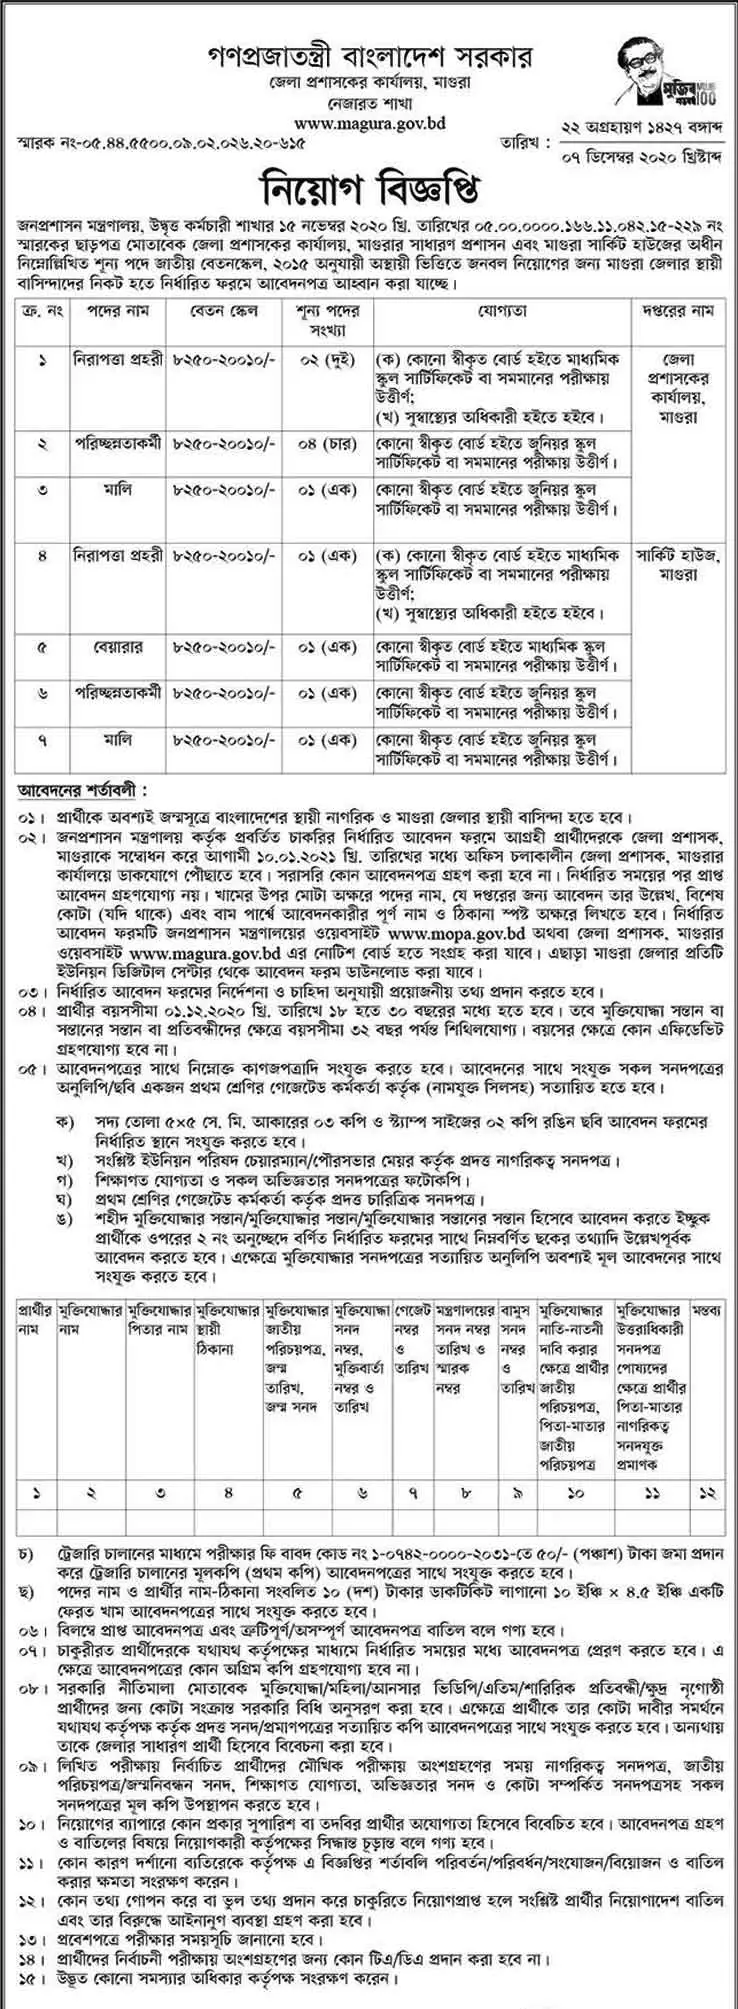 Magura District Office Job Circular 2021 www magura gov bd